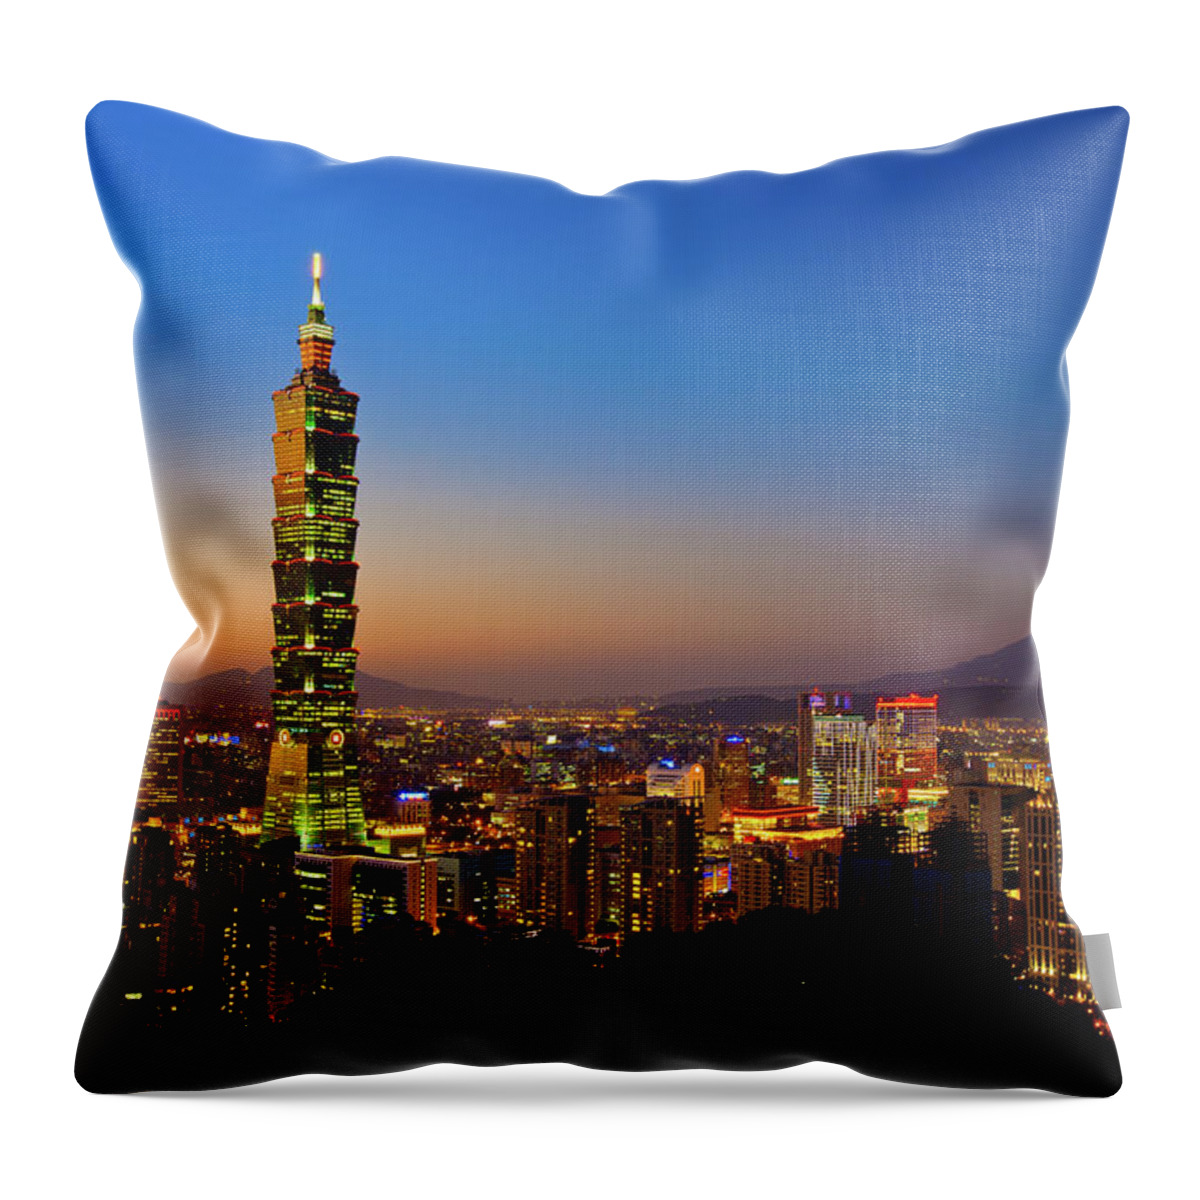 Taiwan Throw Pillow featuring the photograph Taipei 101 At Dusk by Jung-pang Wu